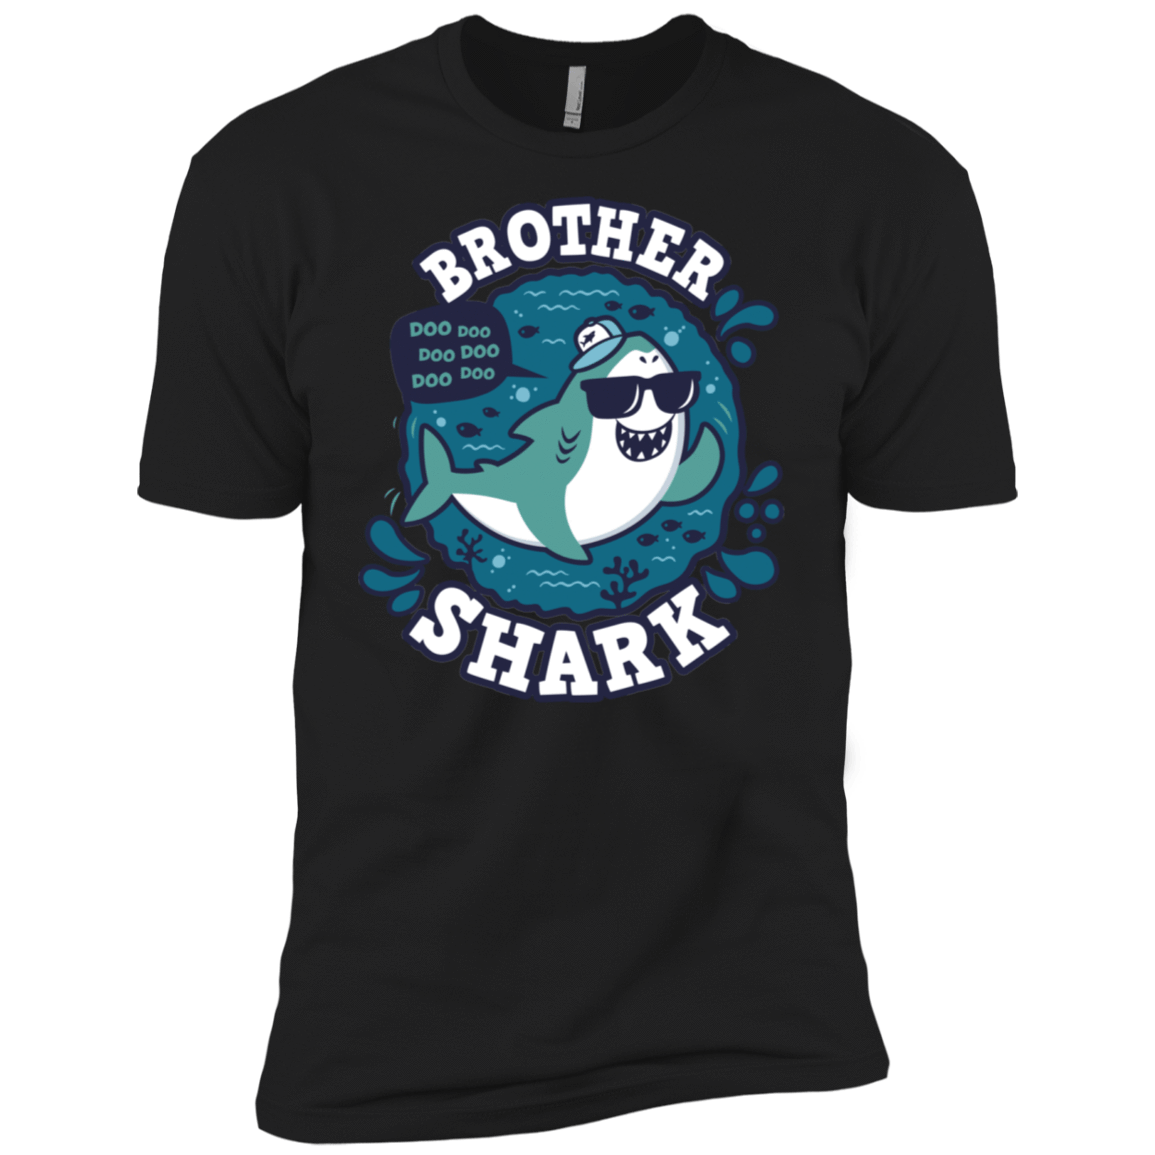 T-Shirts Black / X-Small Shark Family trazo - Brother Men's Premium T-Shirt